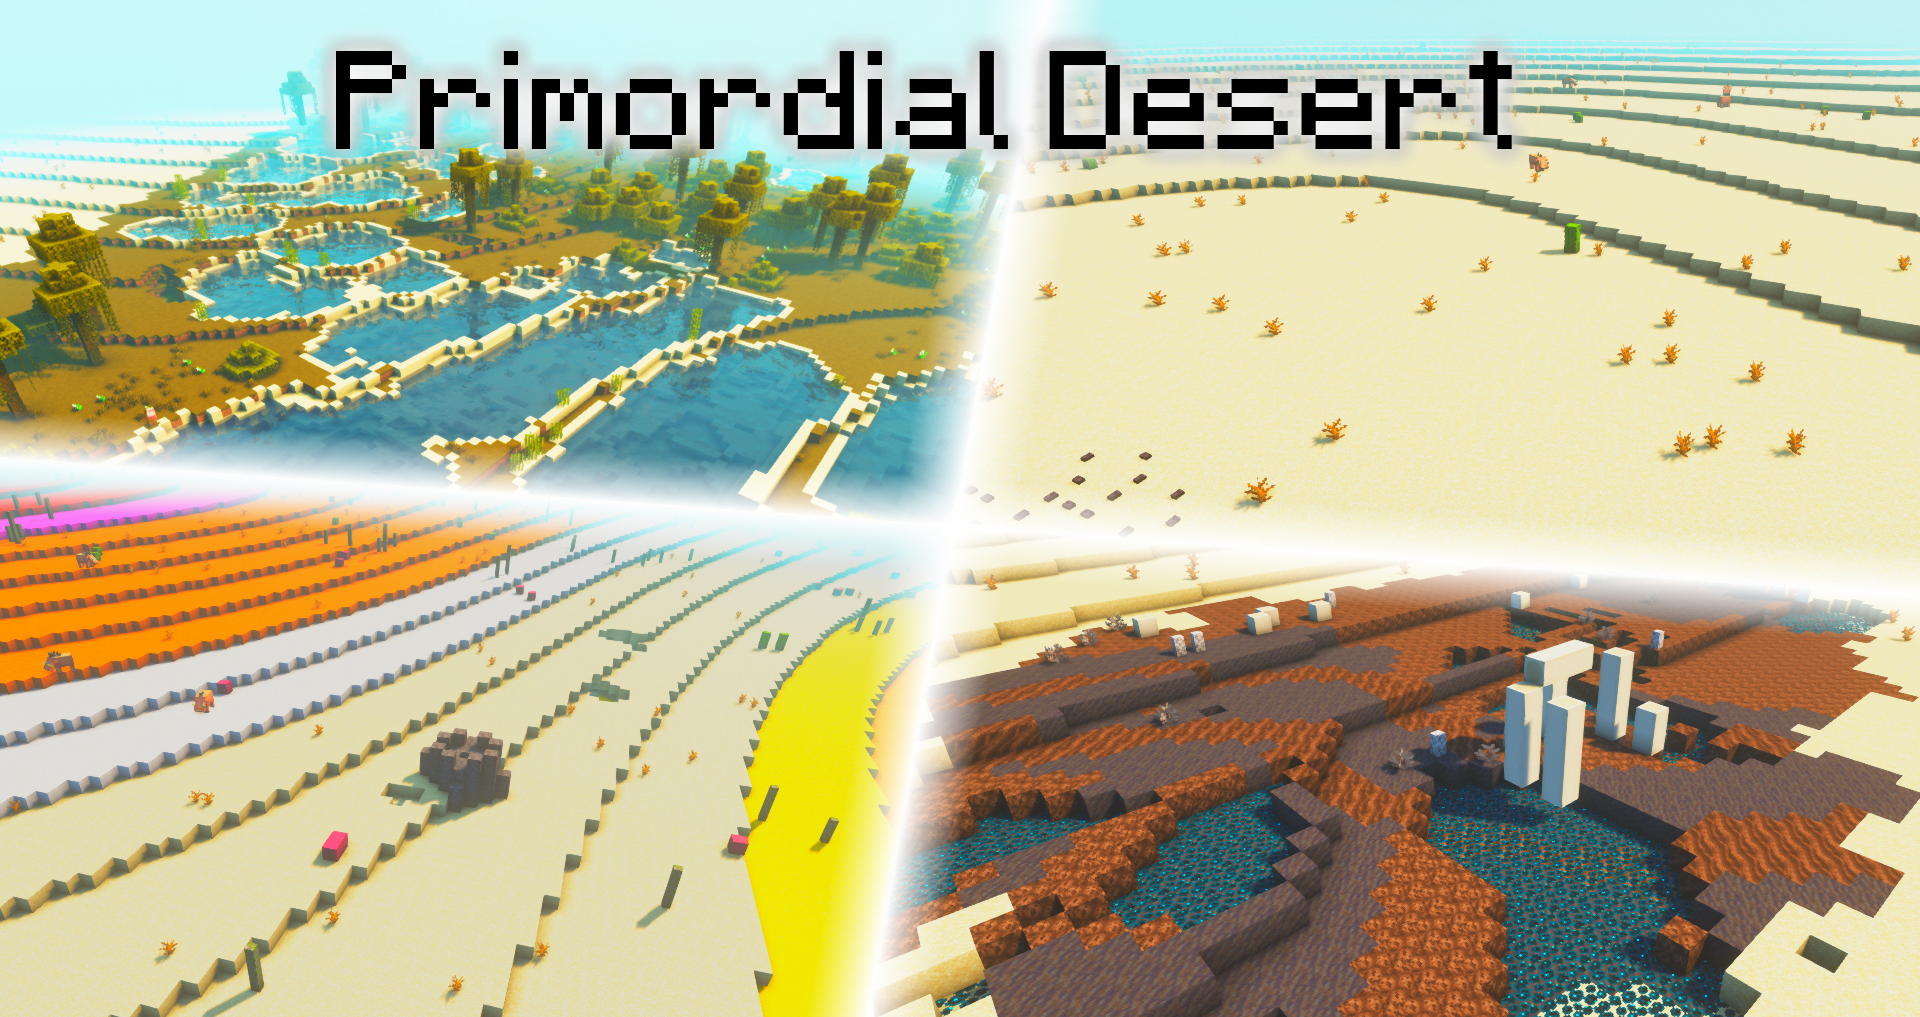 4. Primordial Desert Surface